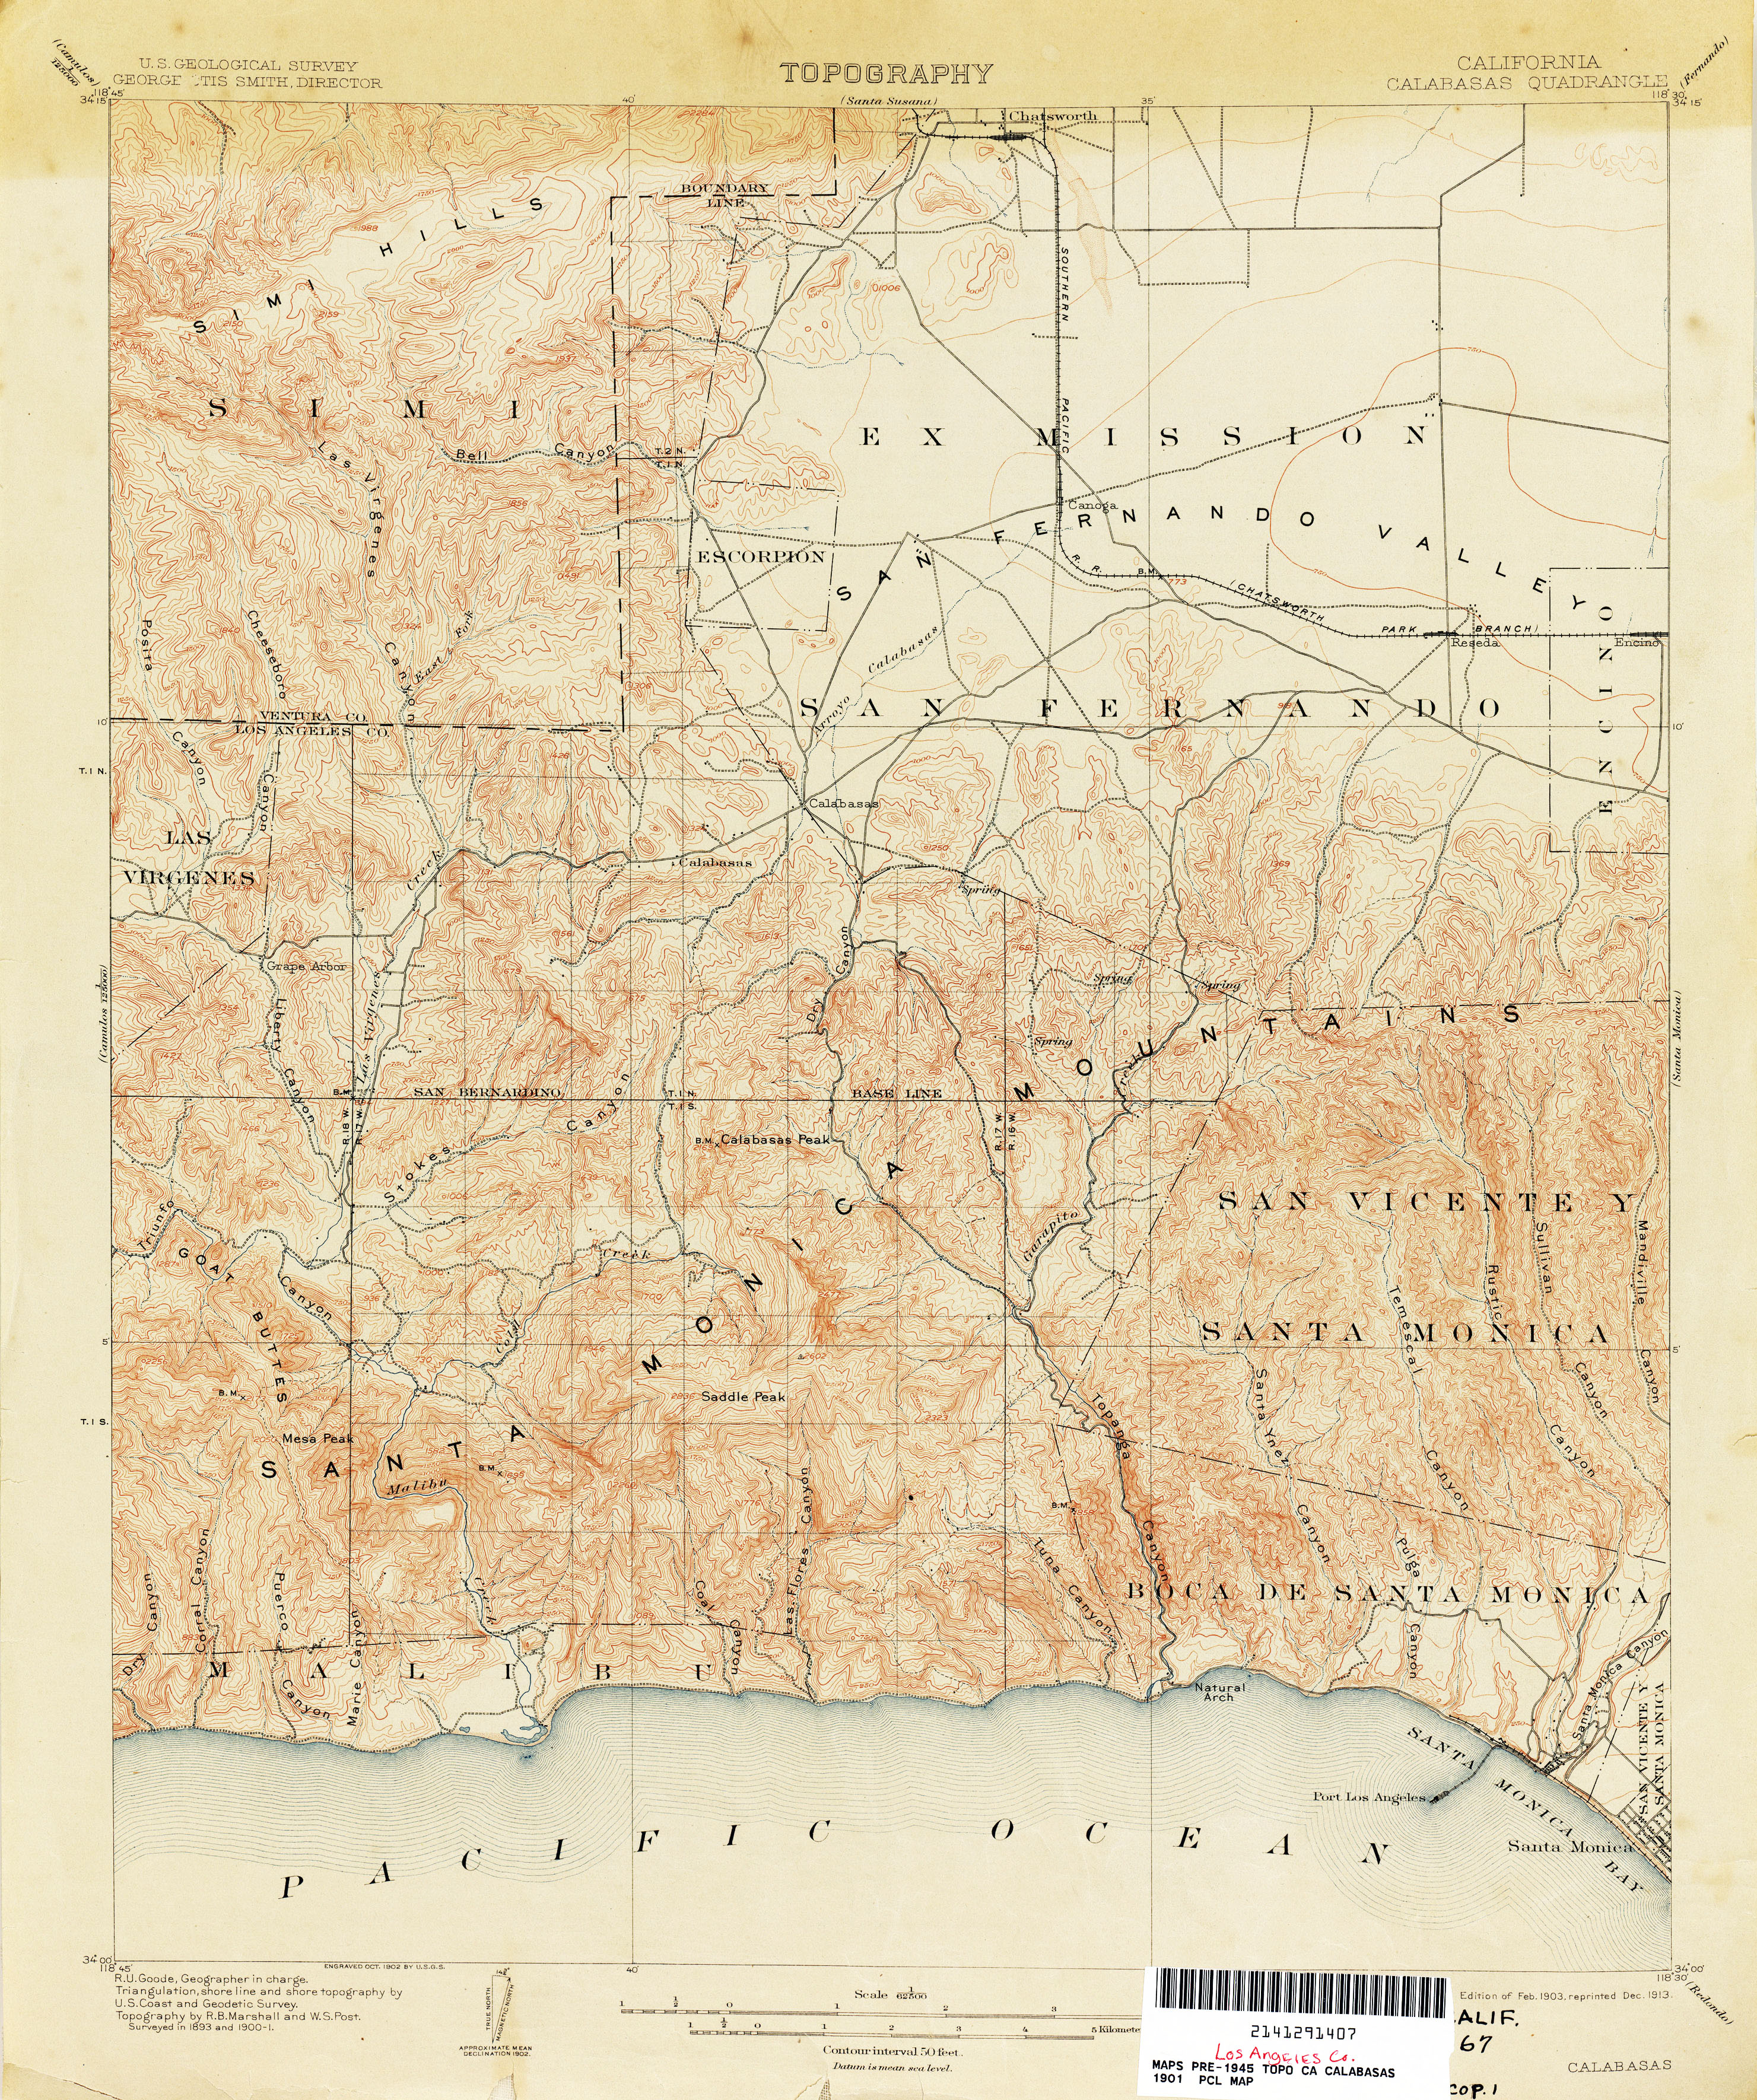 Escondido Carlsbad California 1901 US Geological Survey Topographic Map \u2013 San Luis Rey Merle CA Antique Oceanside Encinitas Santa Rosa